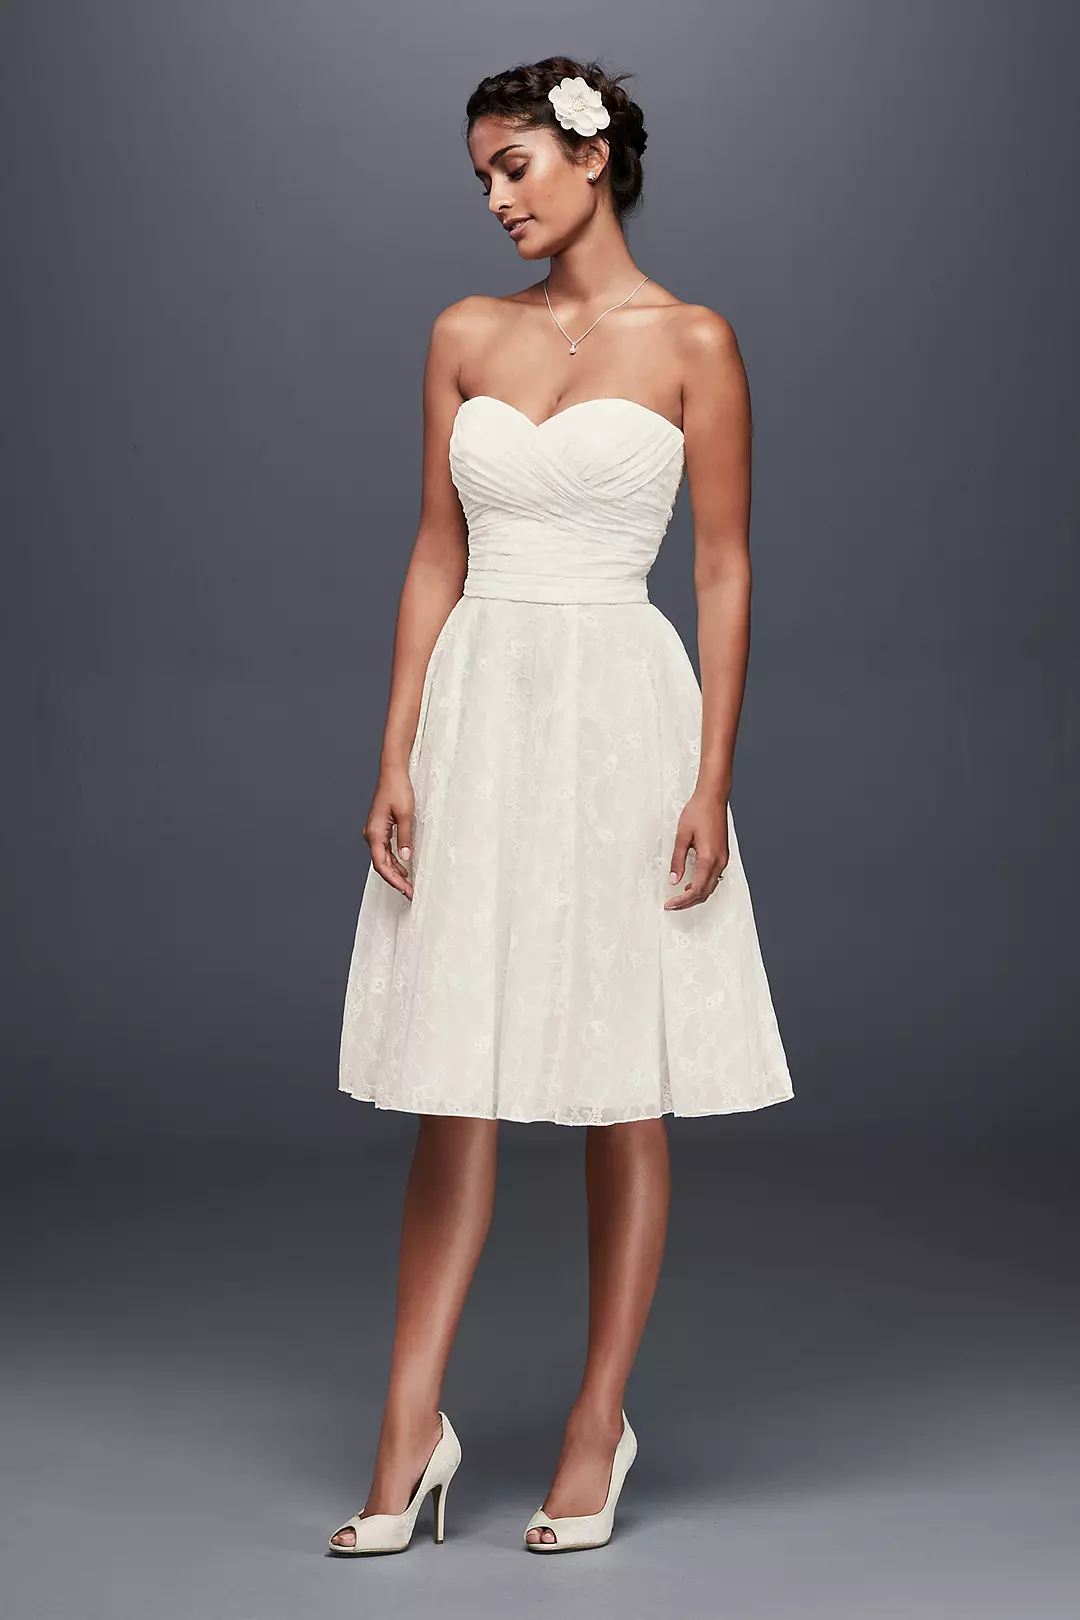 Strapless Lace Plus Size Short Wedding Dress Image